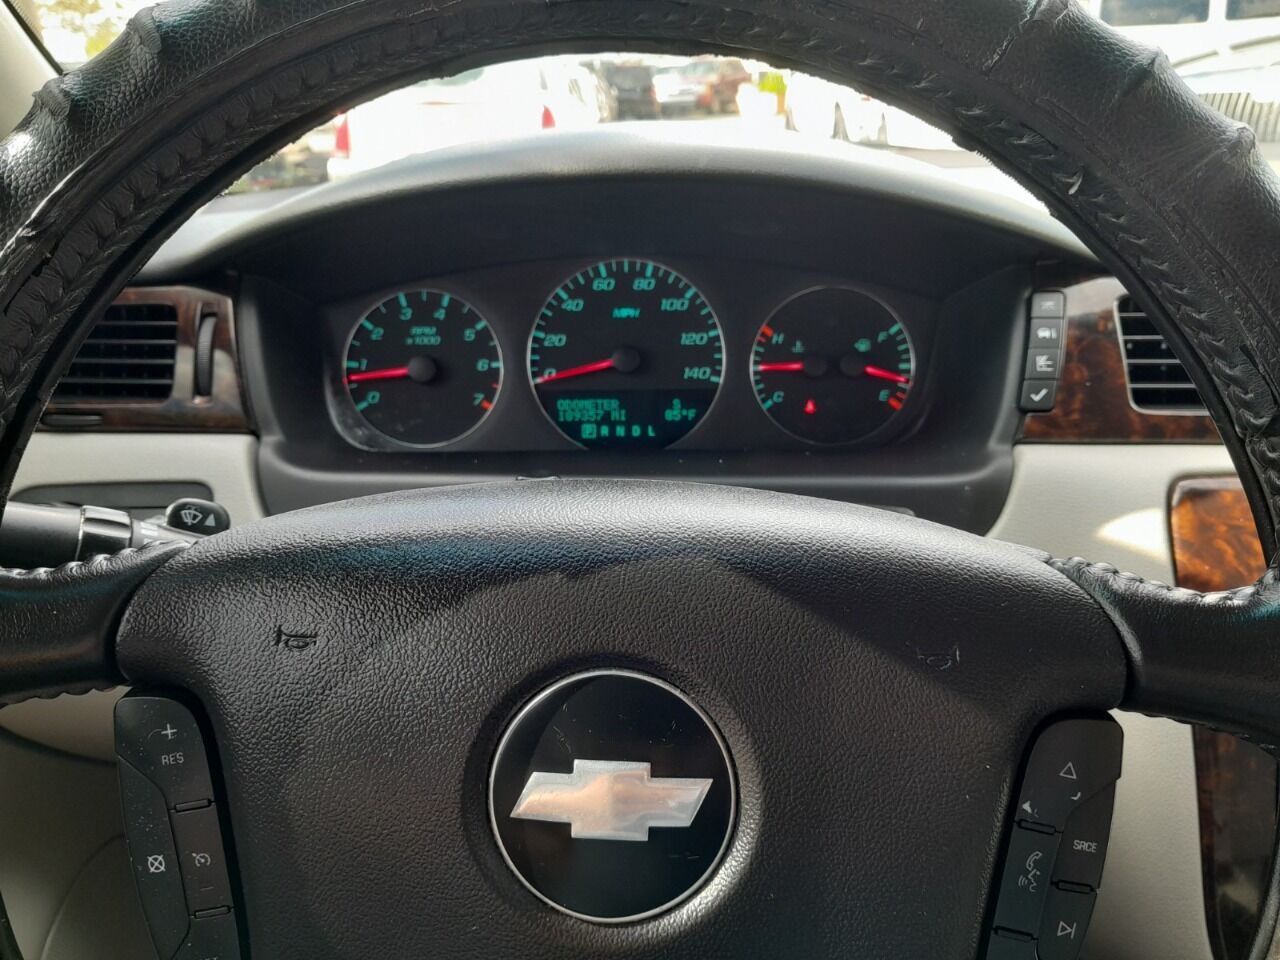 2013 Chevrolet Impala Sedan - $4,450